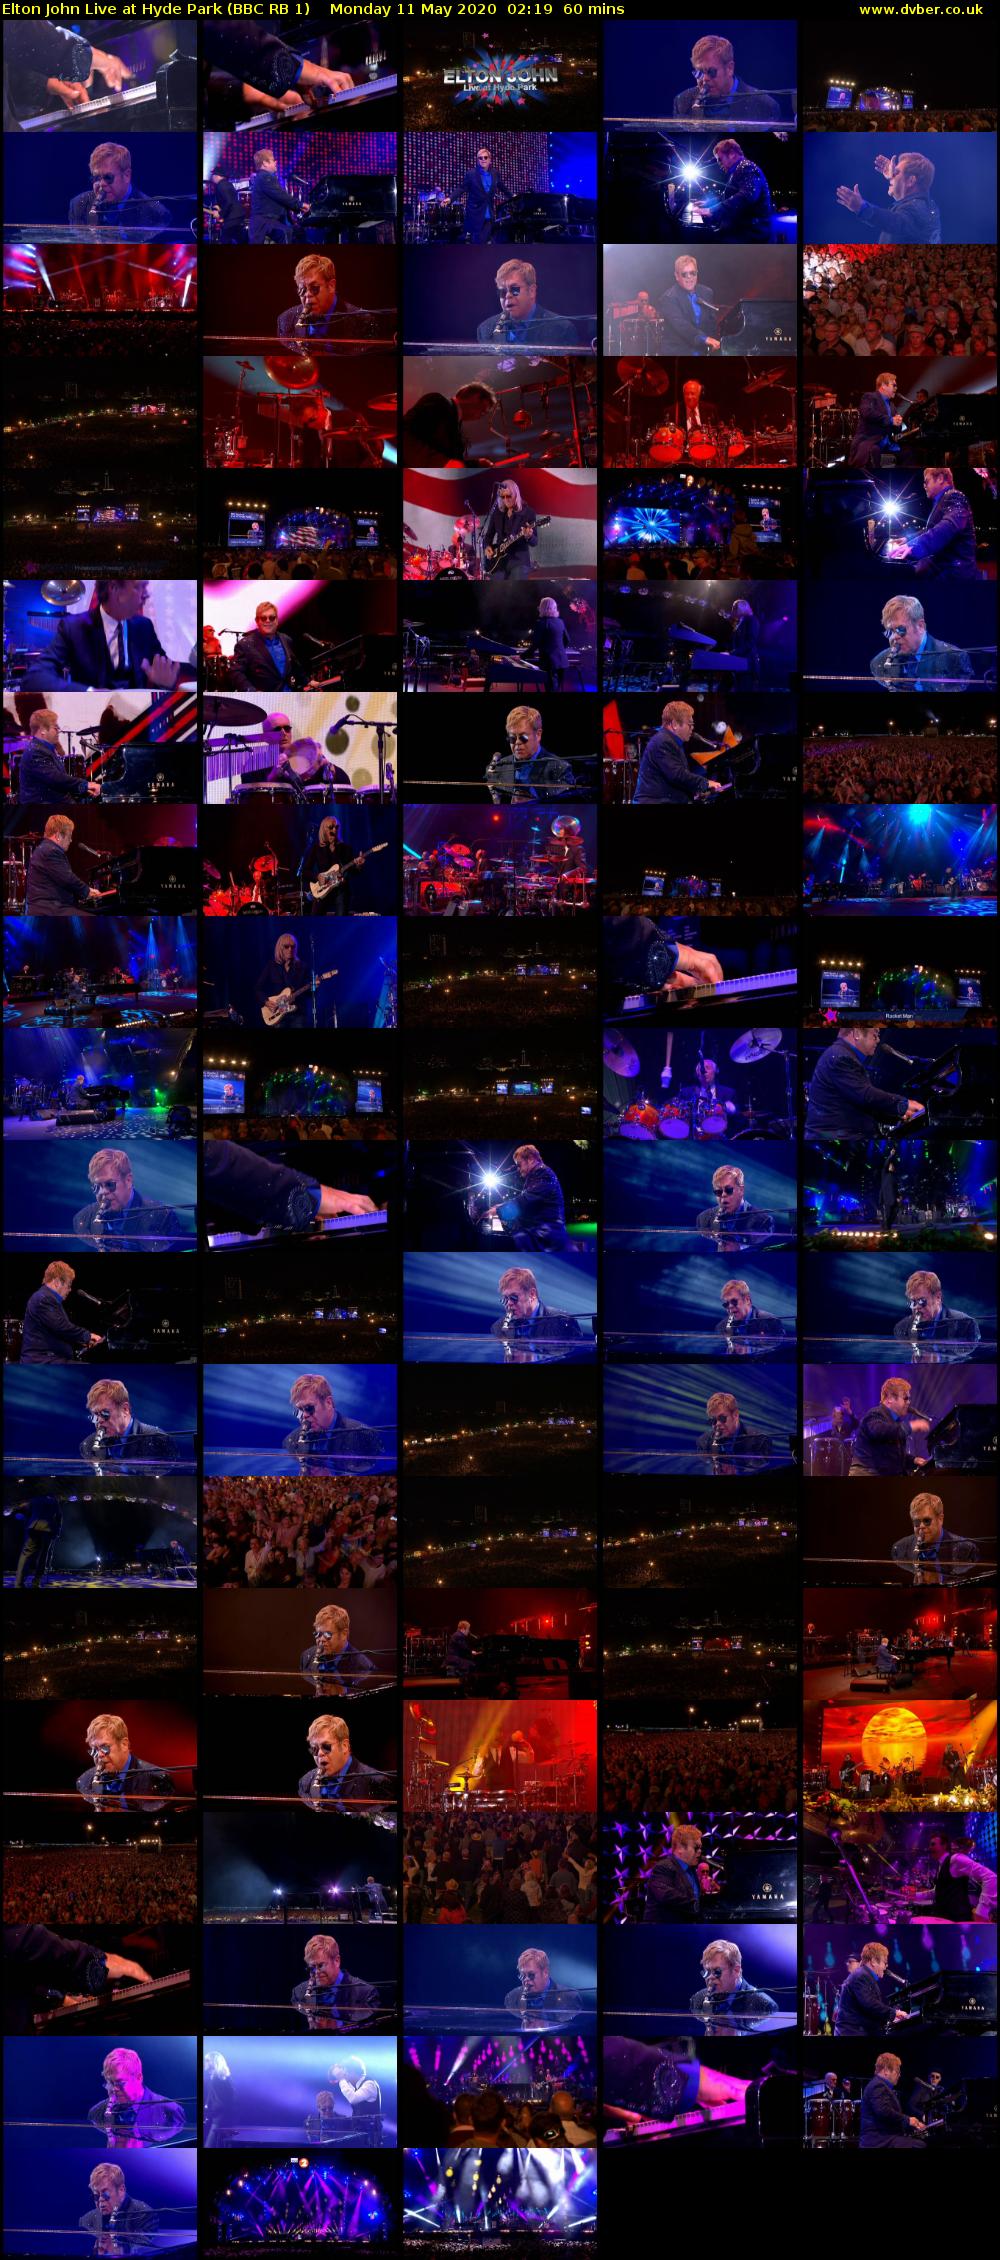 Elton John Live at Hyde Park (BBC RB 1) Monday 11 May 2020 02:19 - 03:19